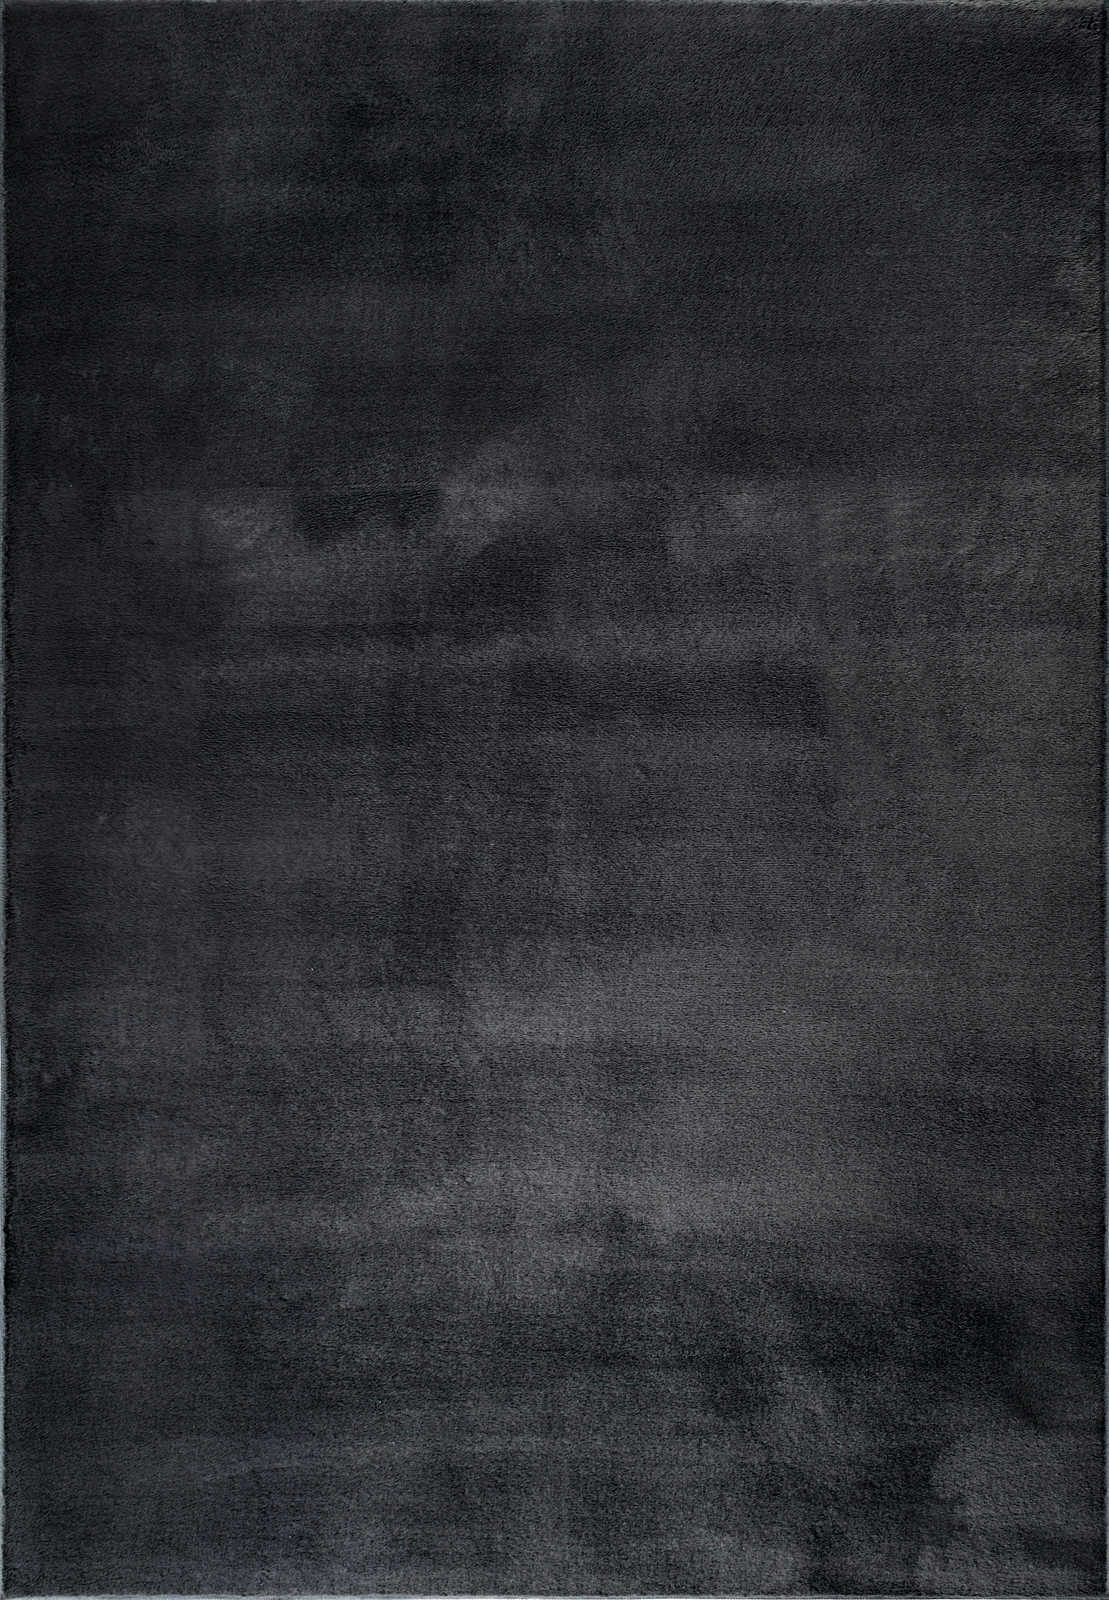             Cuddly soft high pile carpet in black - 160 x 117 cm
        